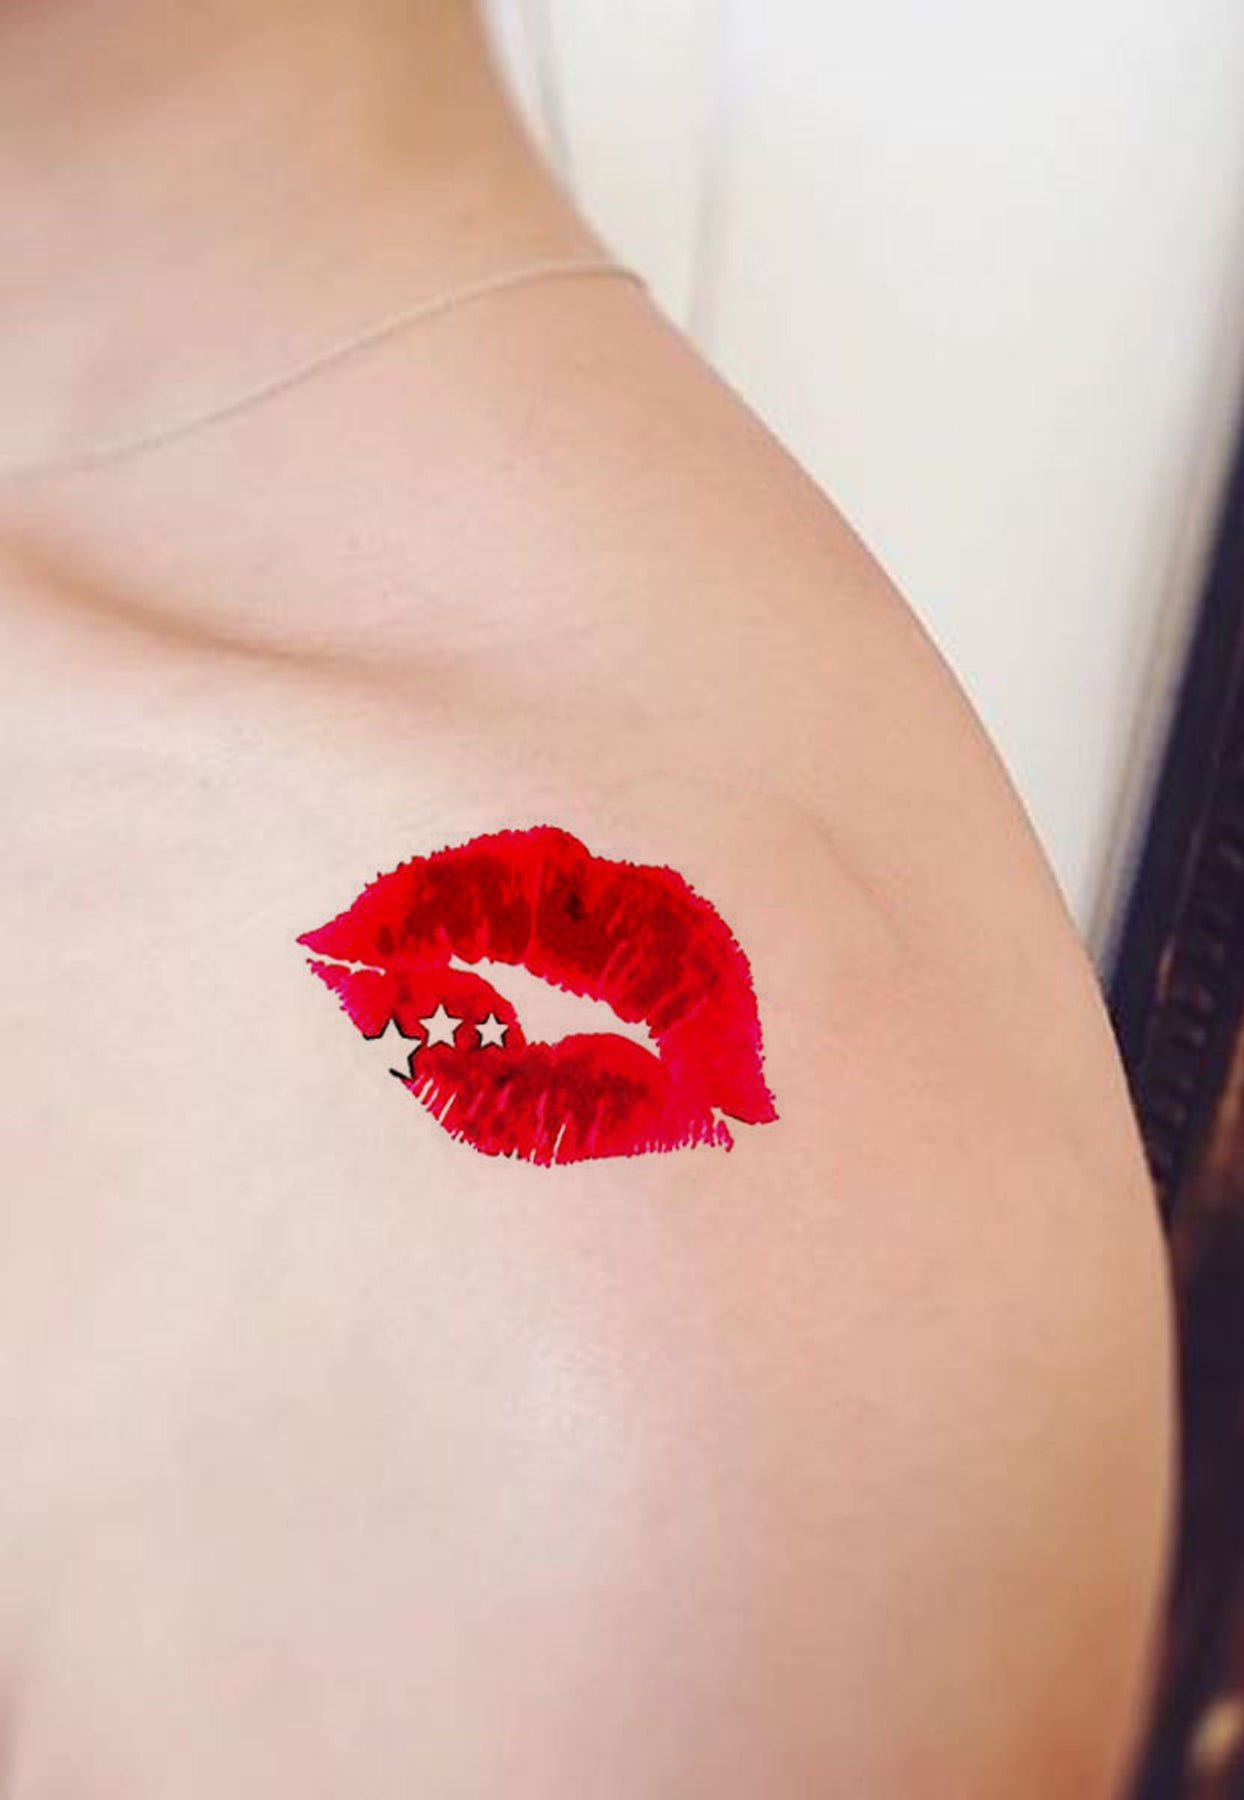 Sweet honey lips tattooed by... - Eastside Ink Tattoo Studio | Facebook